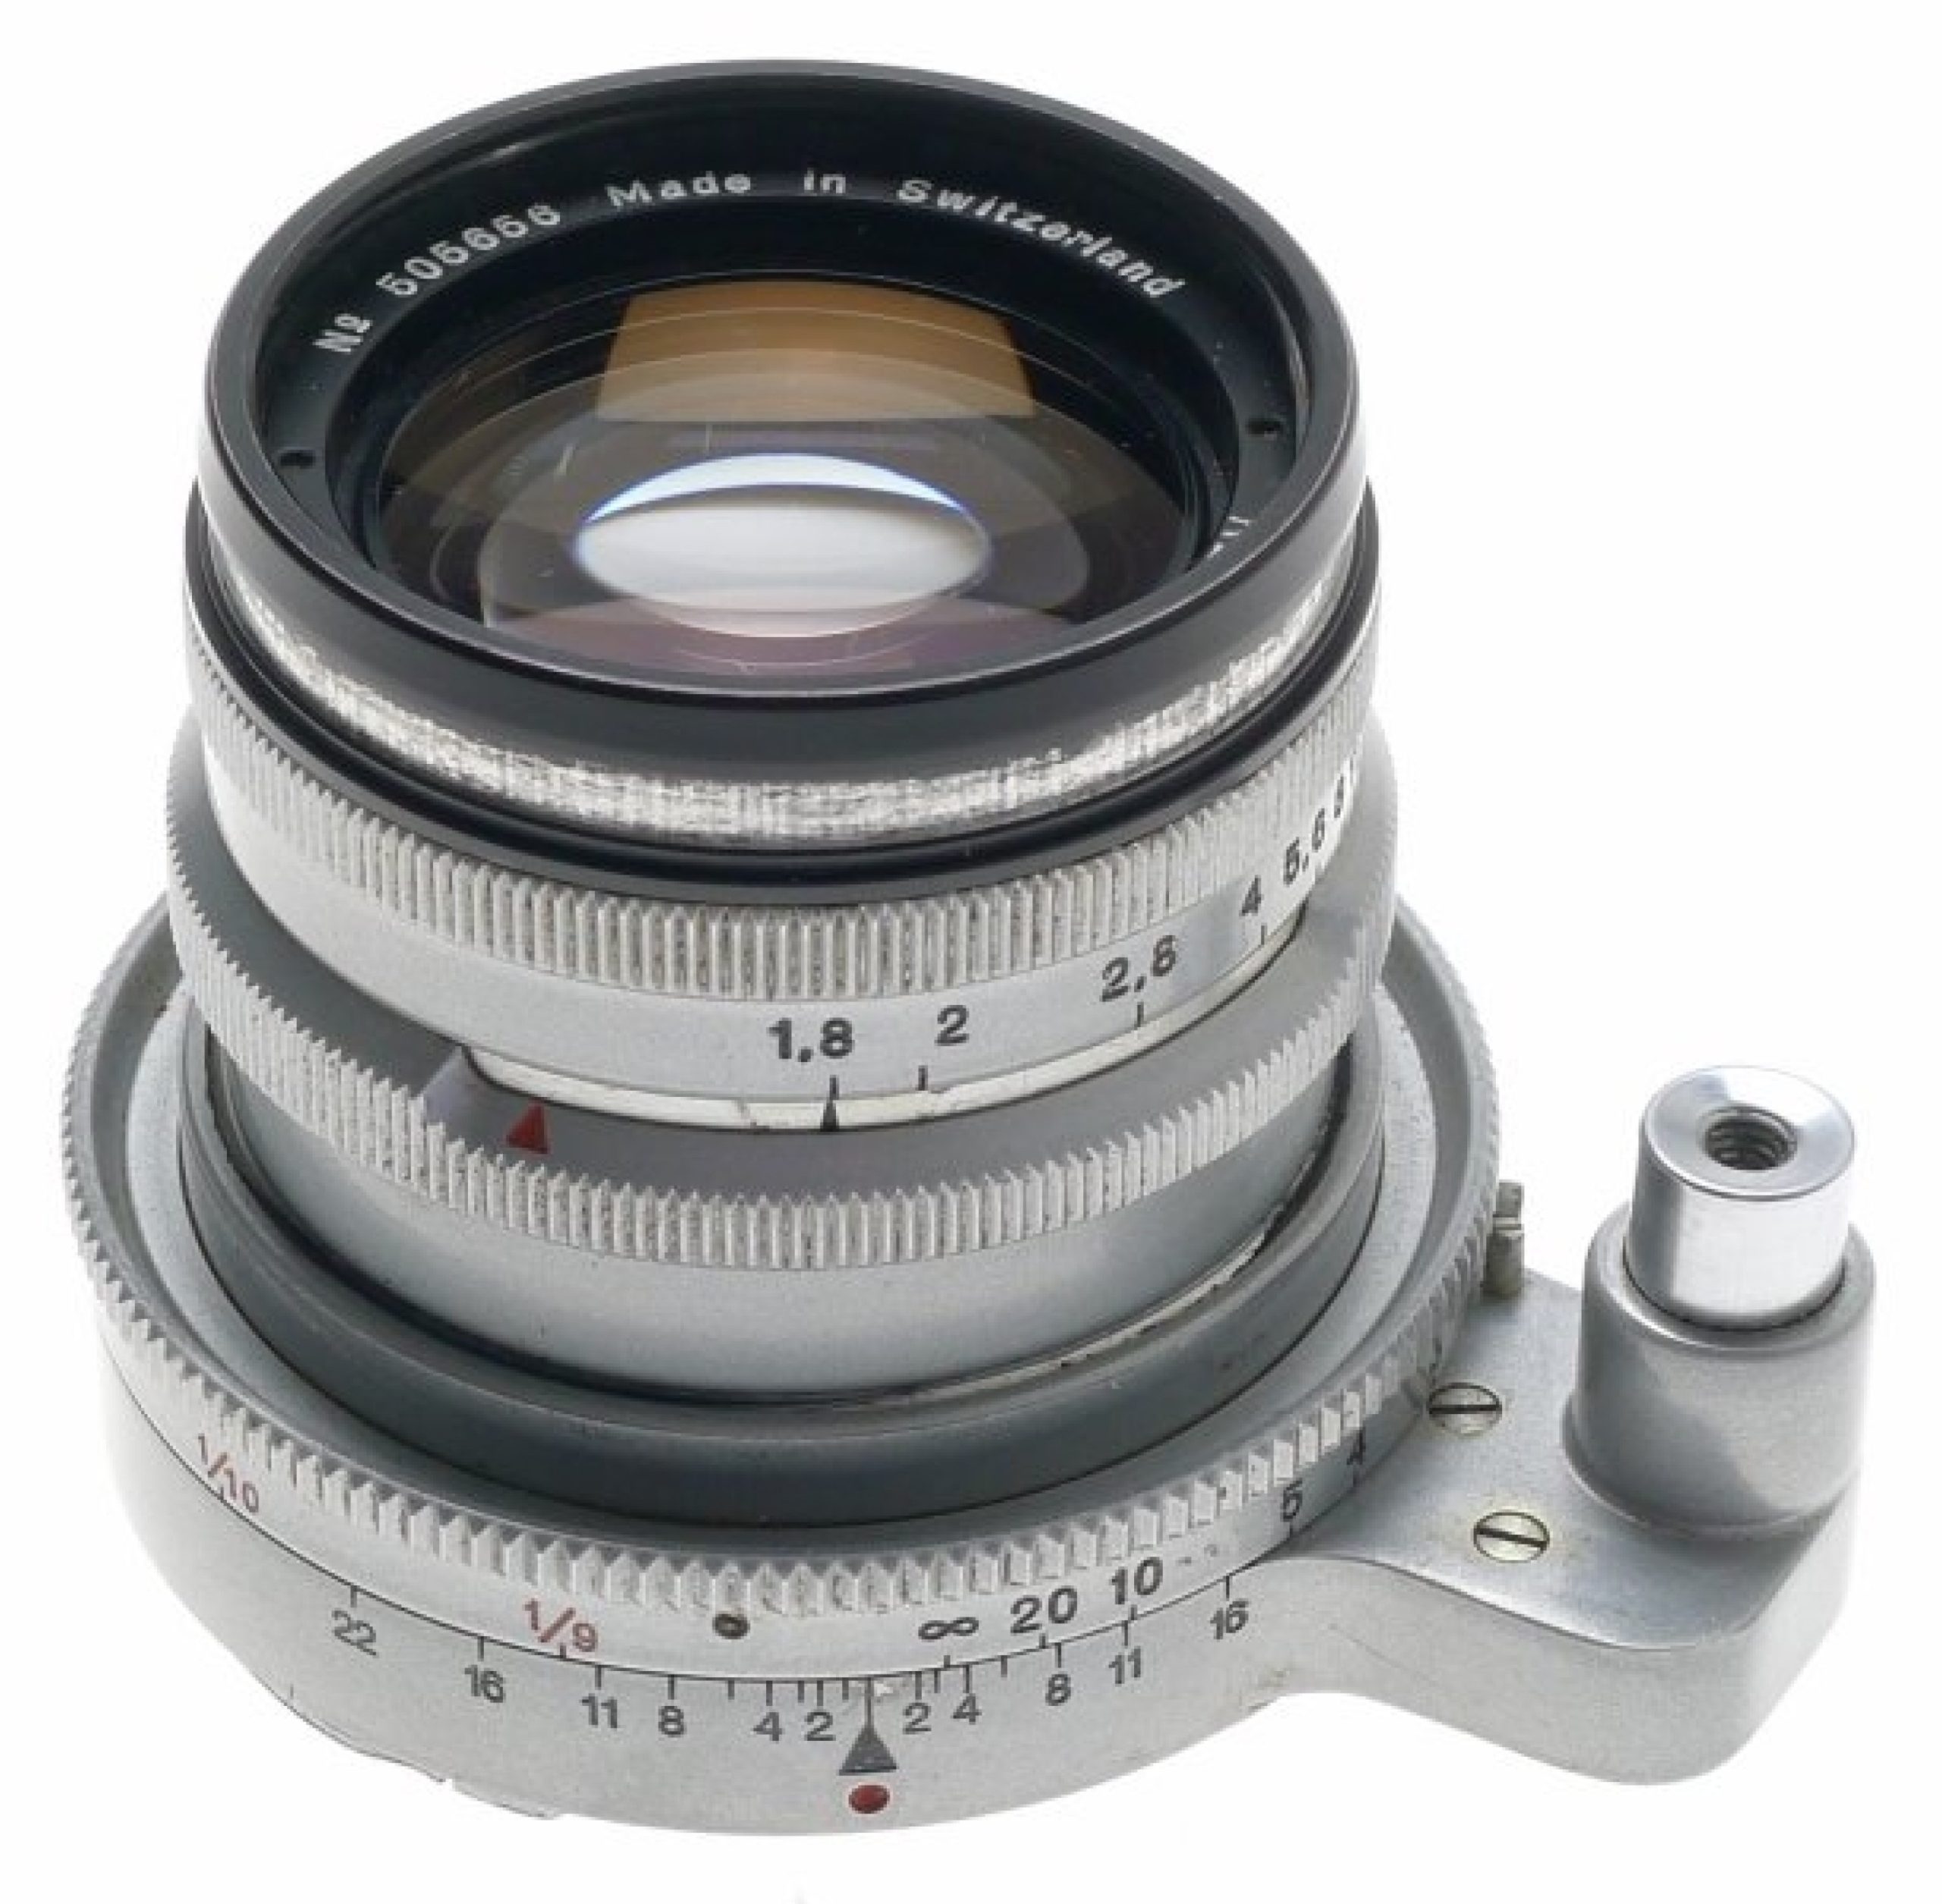 ALPA 6c + Kern Aarau SWITAR 50mm f1.8 - フィルムカメラ